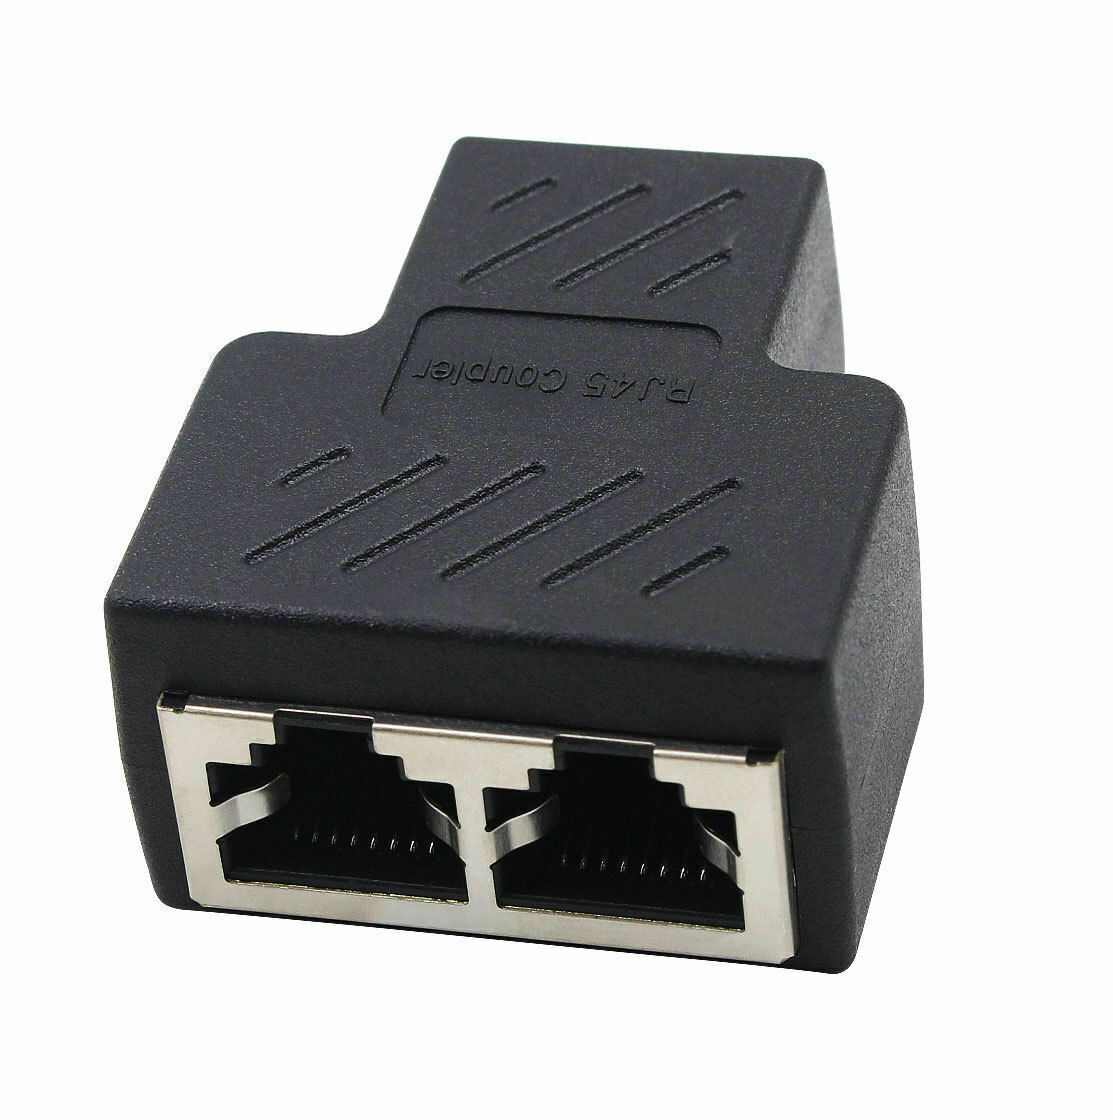 1-10Pcs RJ45 Splitter Adapter 1 to 2 Ways Dual Female Port CAT6/5/7 LAN Ethernet